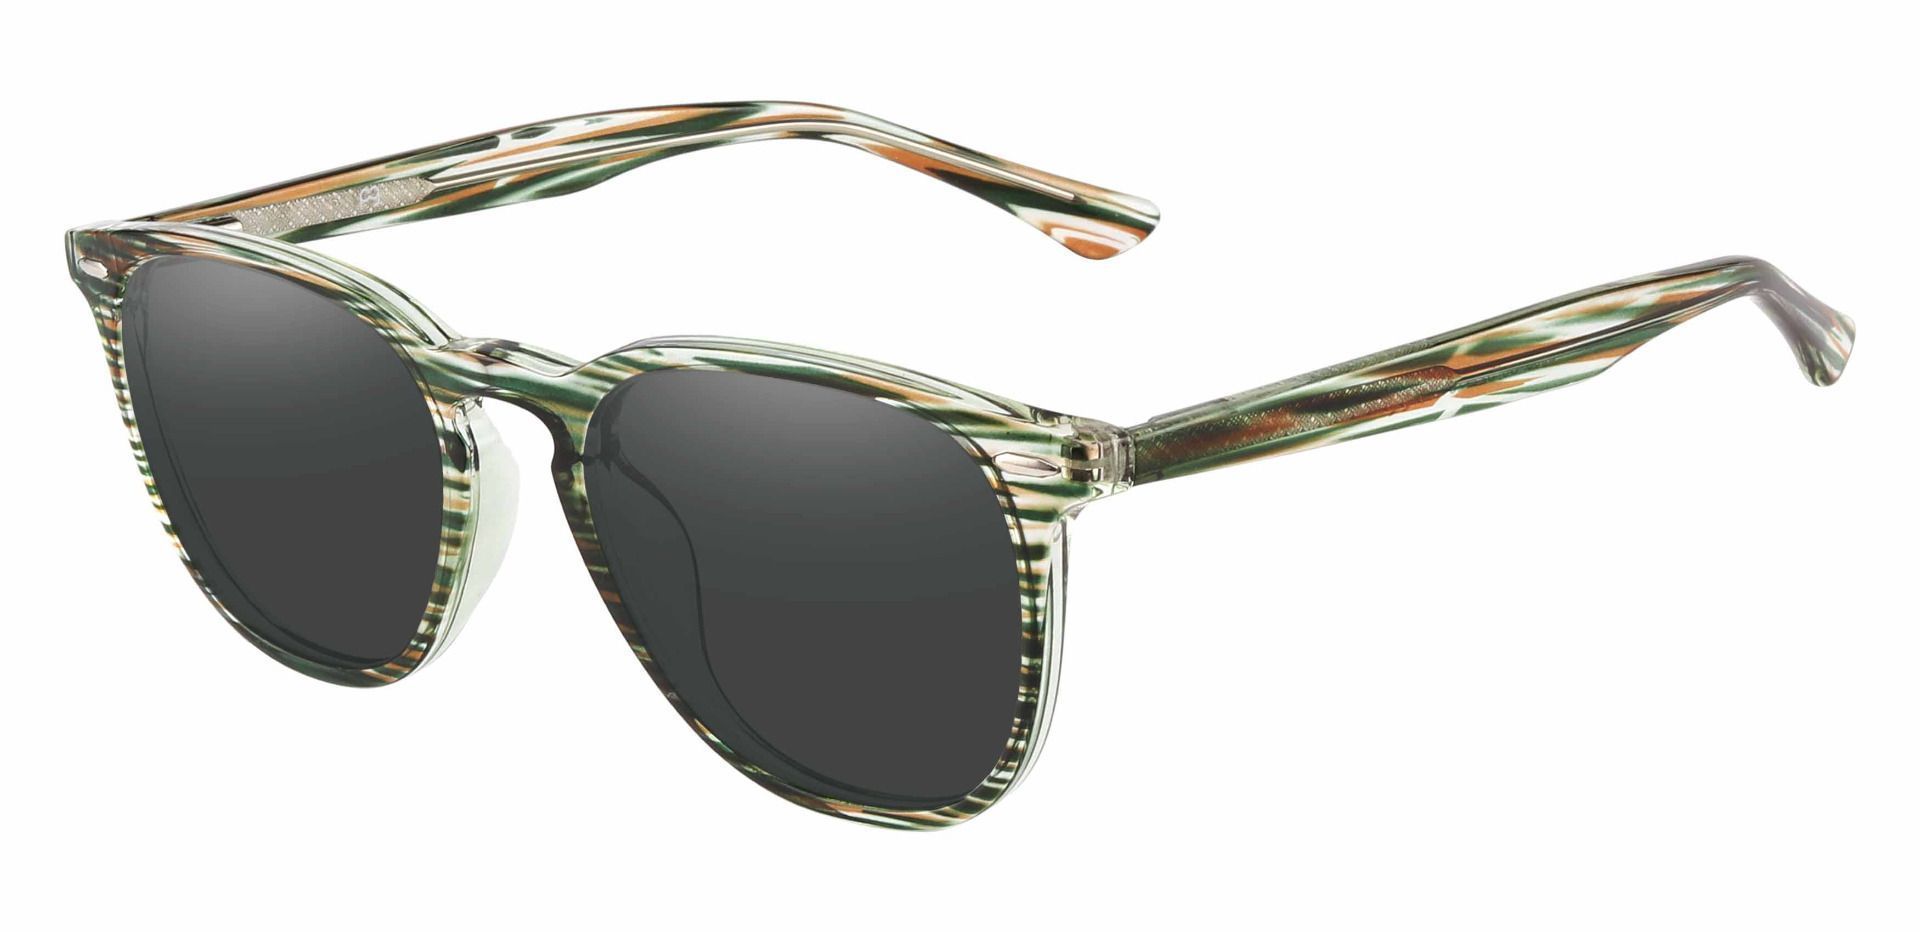 Sycamore Oval Progressive Sunglasses - Green Frame With Gray Lenses